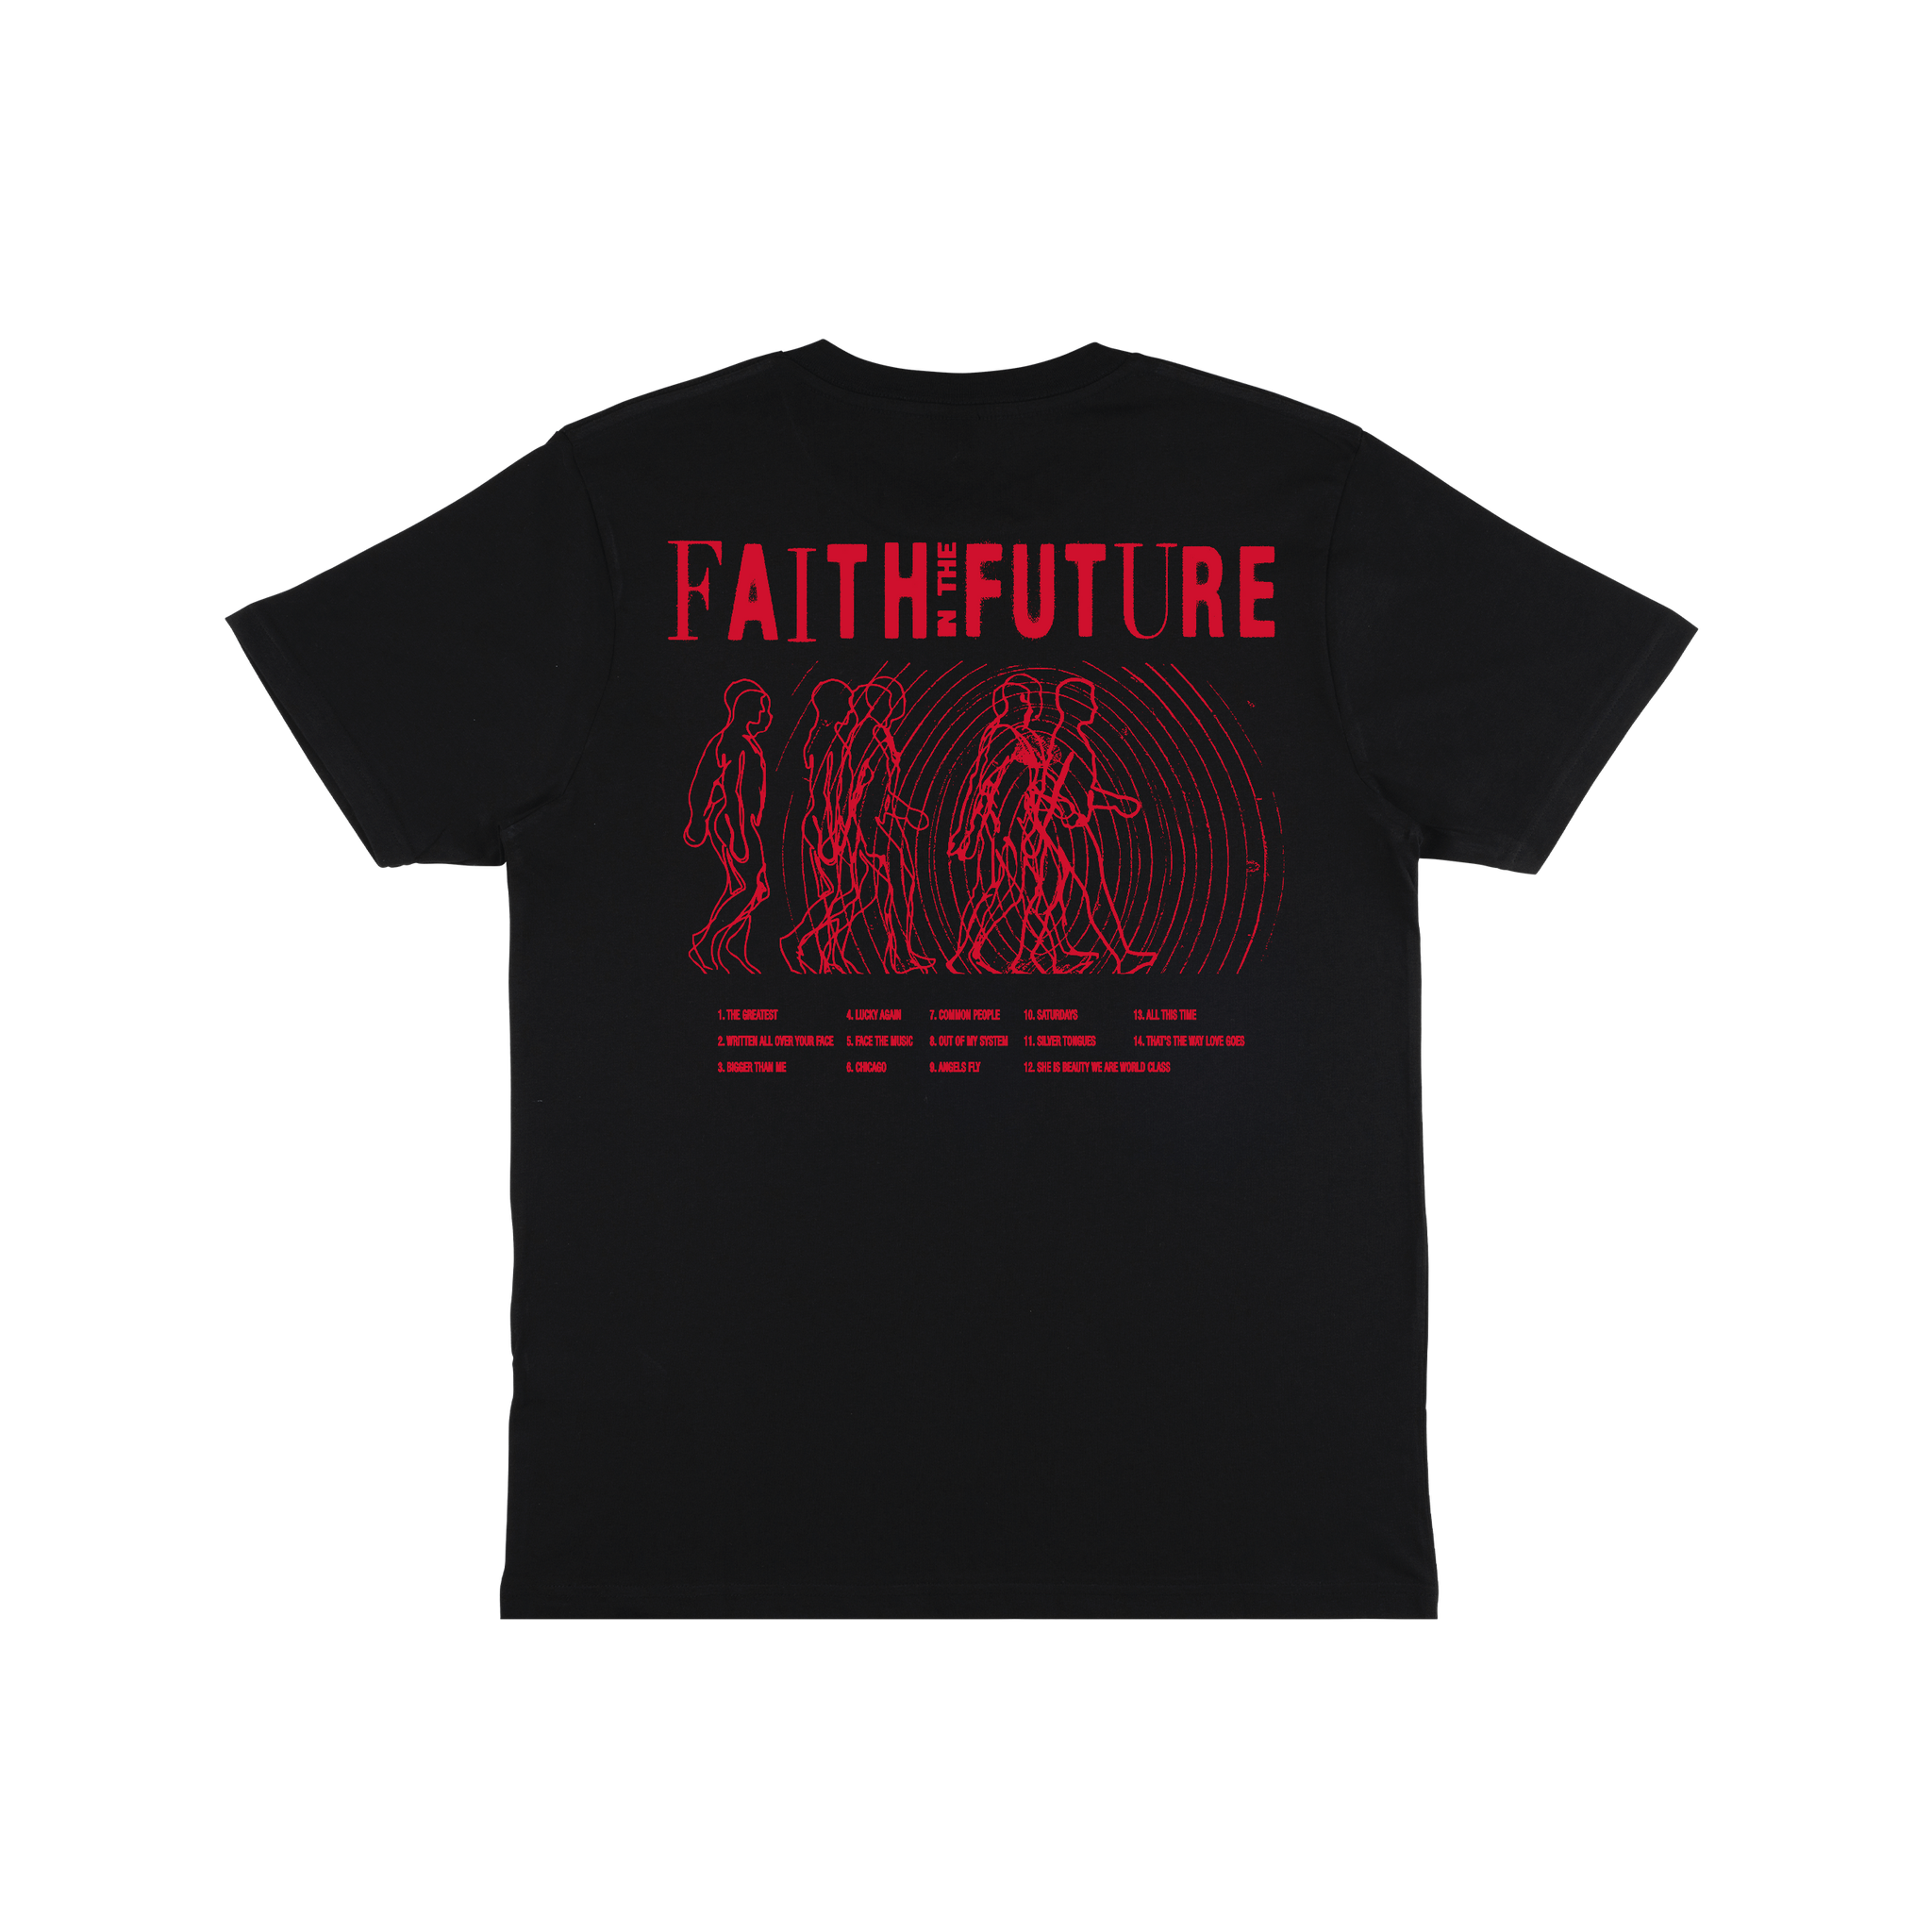 Louis Tomlinson Shirt Faith in the Future Ecru Sweatshirt Louis